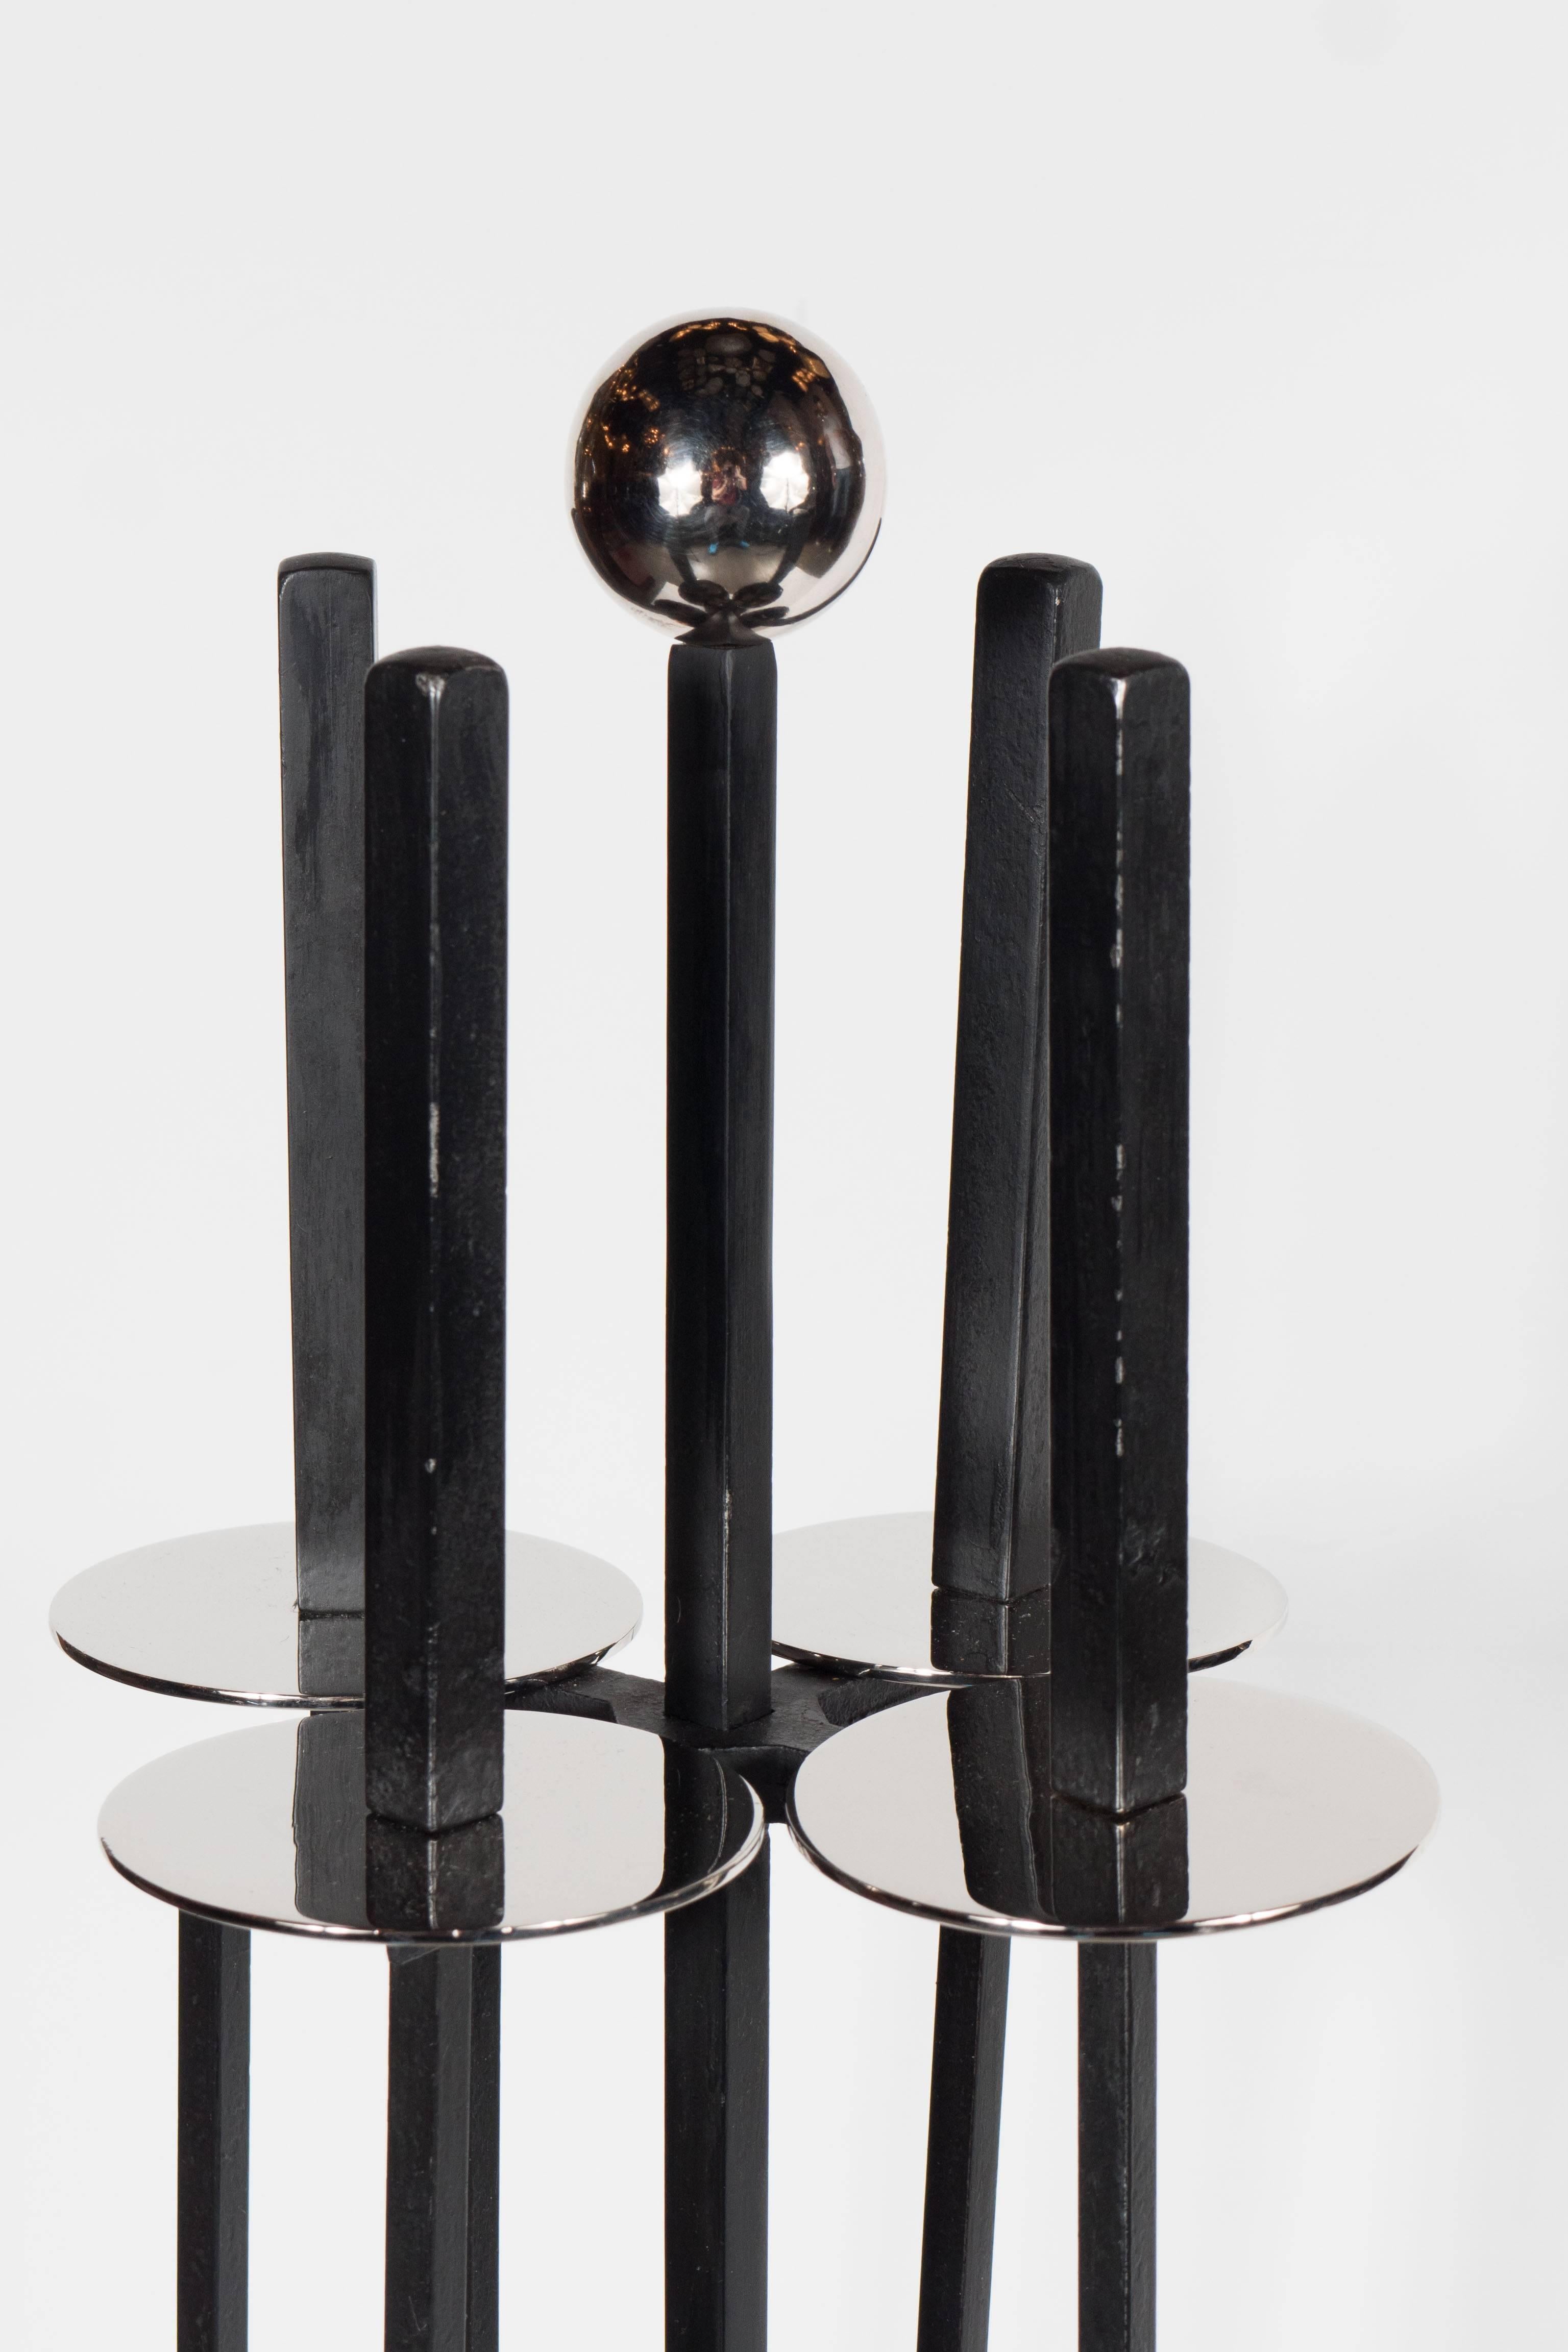 American Mid-Century Modernist Fire Tool Set designed by Mel Bogart